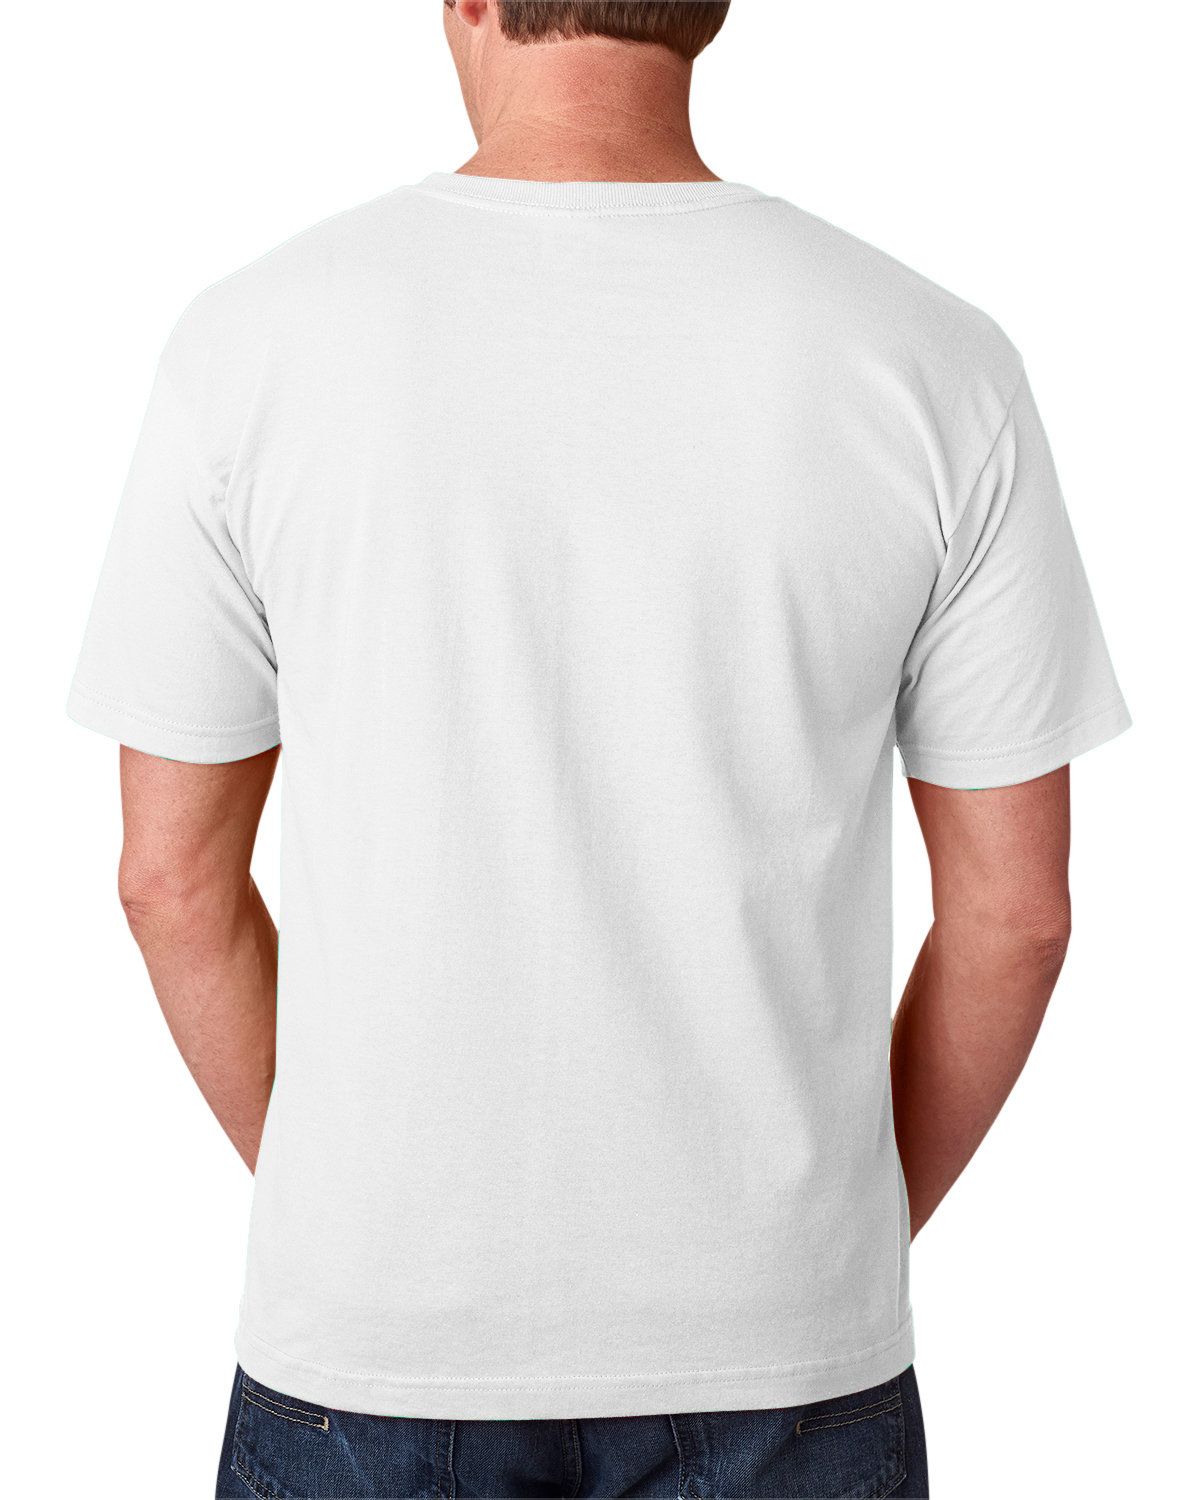 'Bayside BA5040 Adult Cotton T-Shirt'